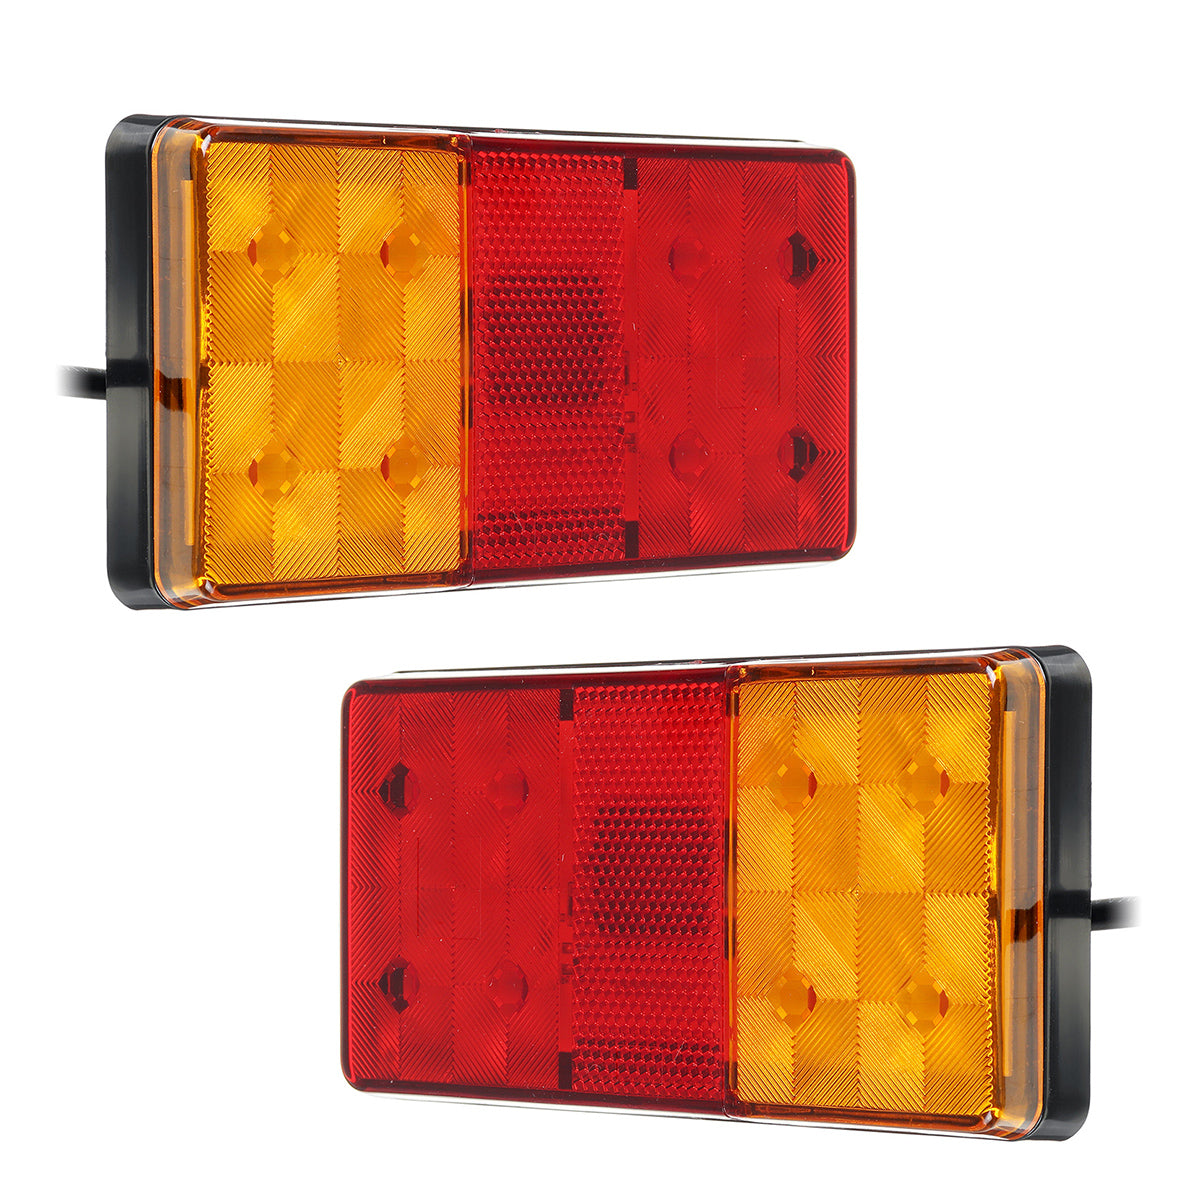 Firebrick 2pcs 12V Red Amber Dual LED Trailer Light Truck Caravan Tail Lamp Stop Bat Indicator Light Waterproof